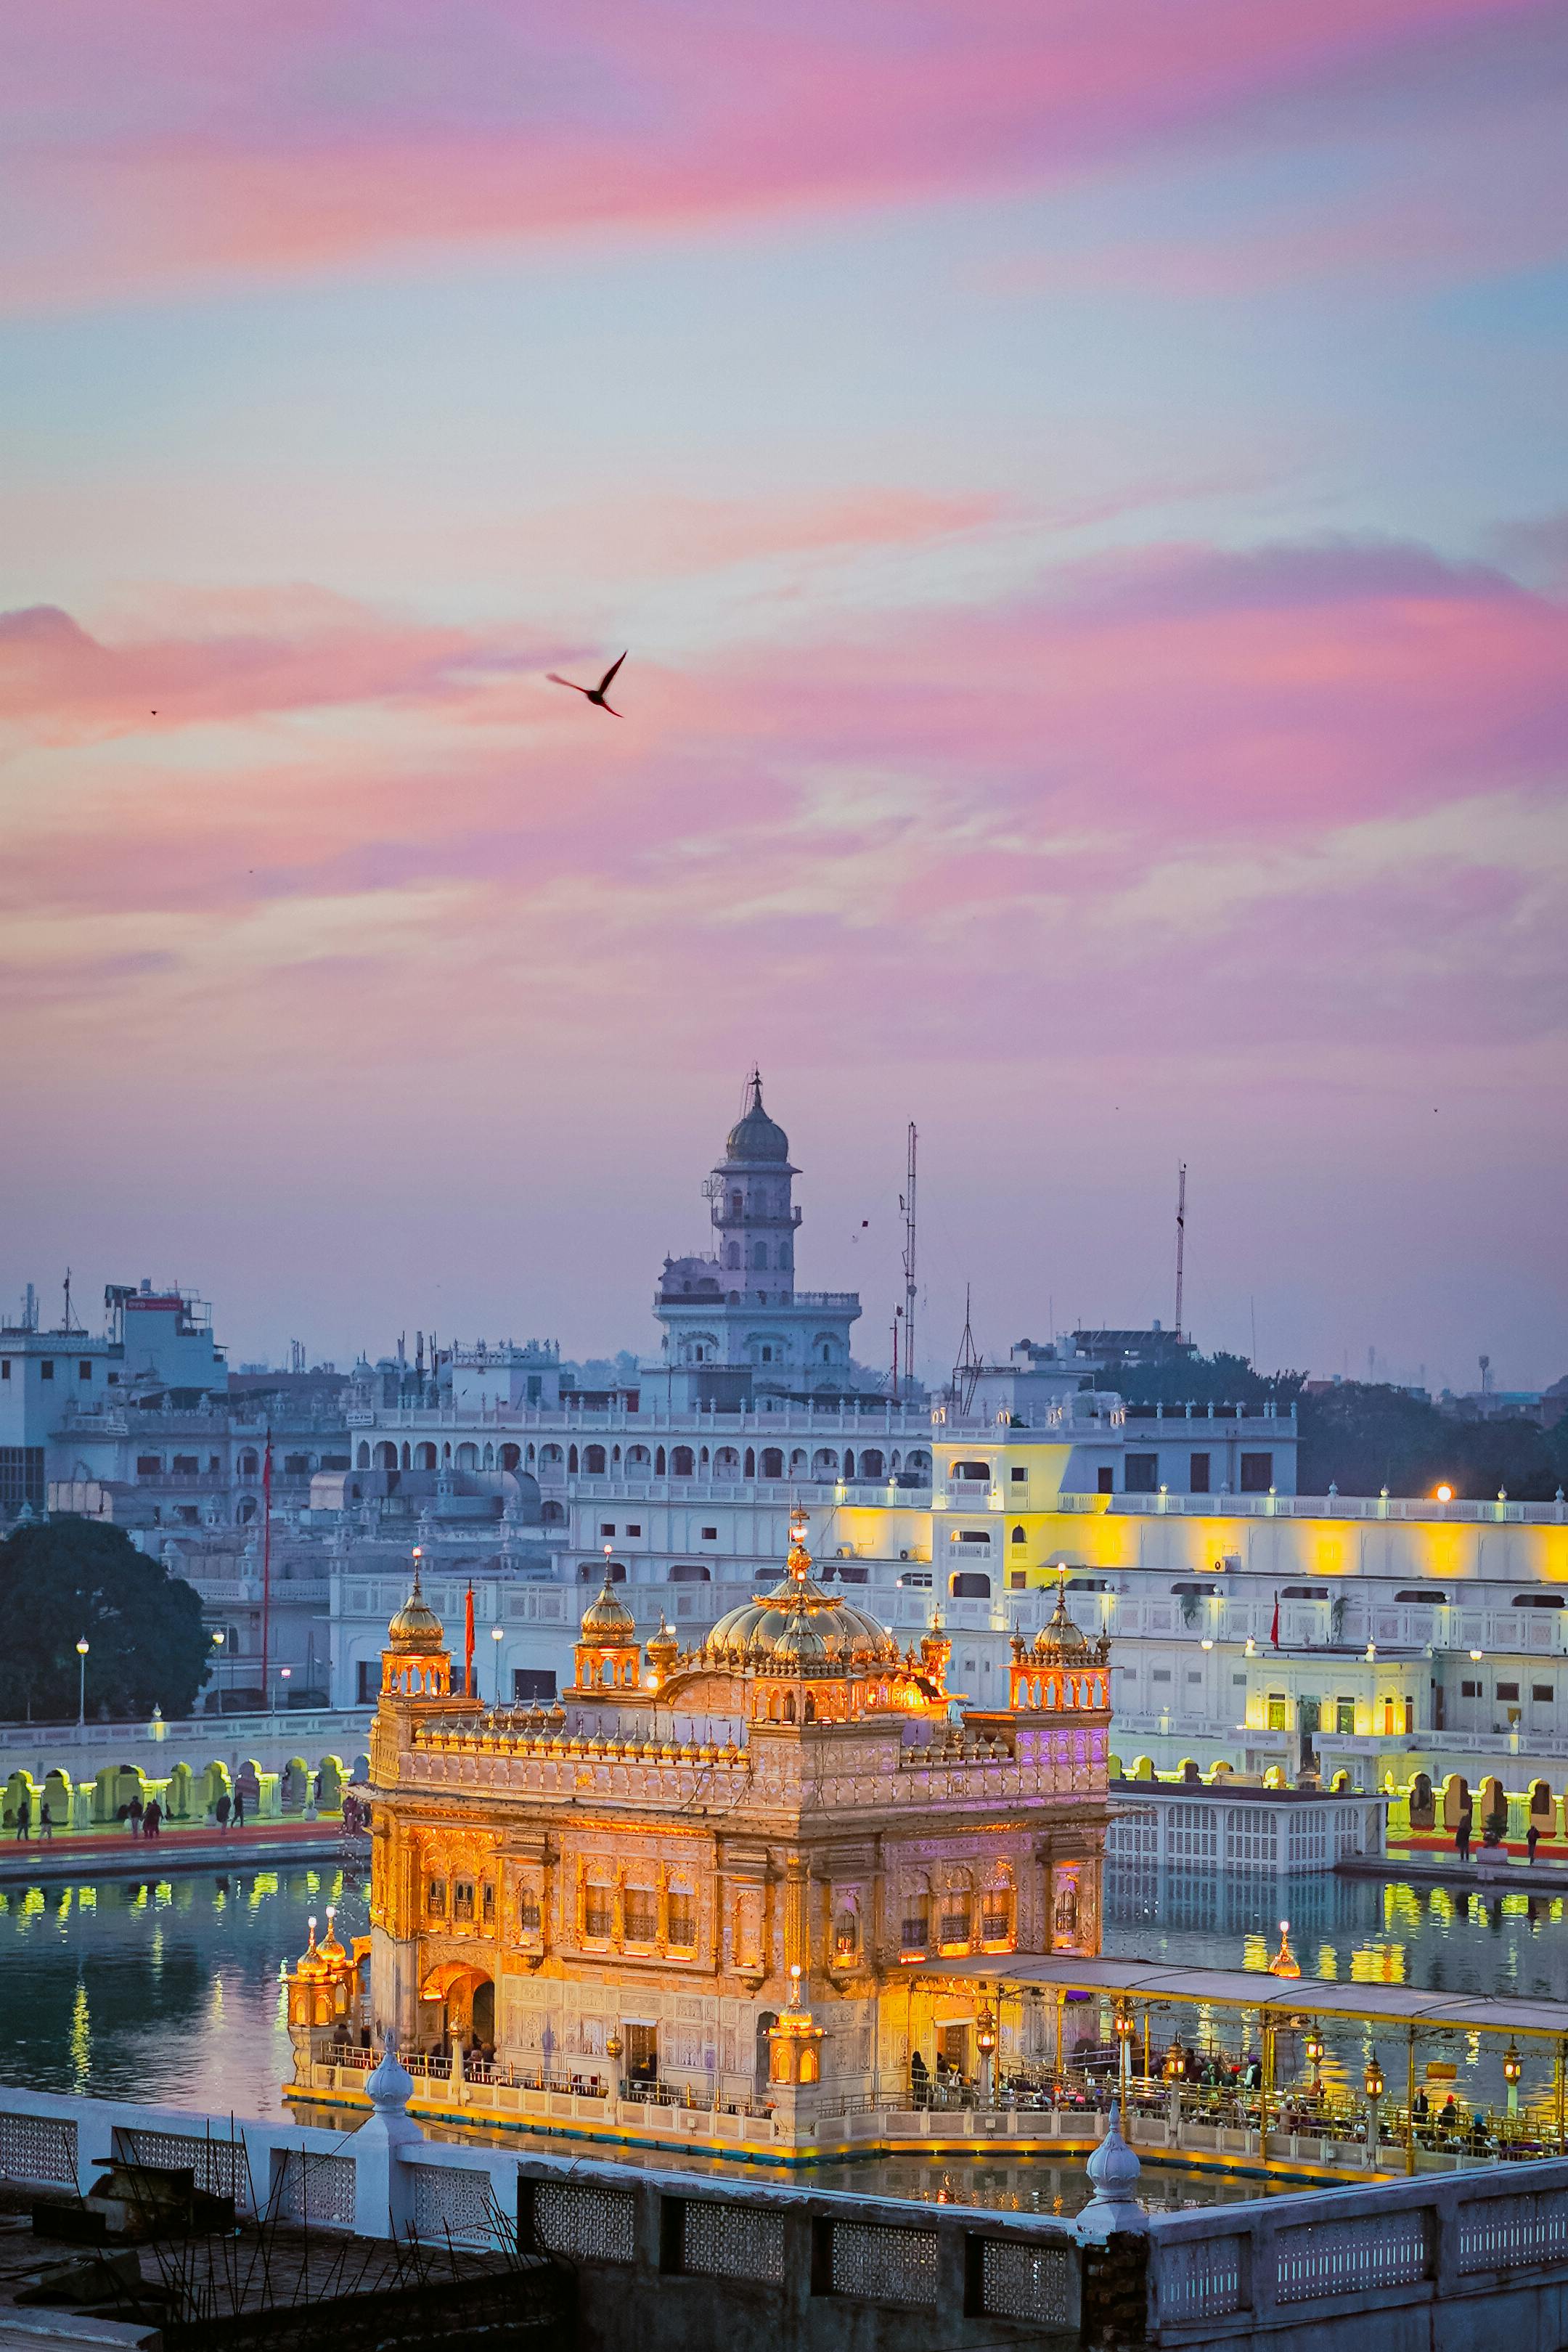 File:Golden Temple -Amritsar Punjab India.jpg - Wikimedia Commons